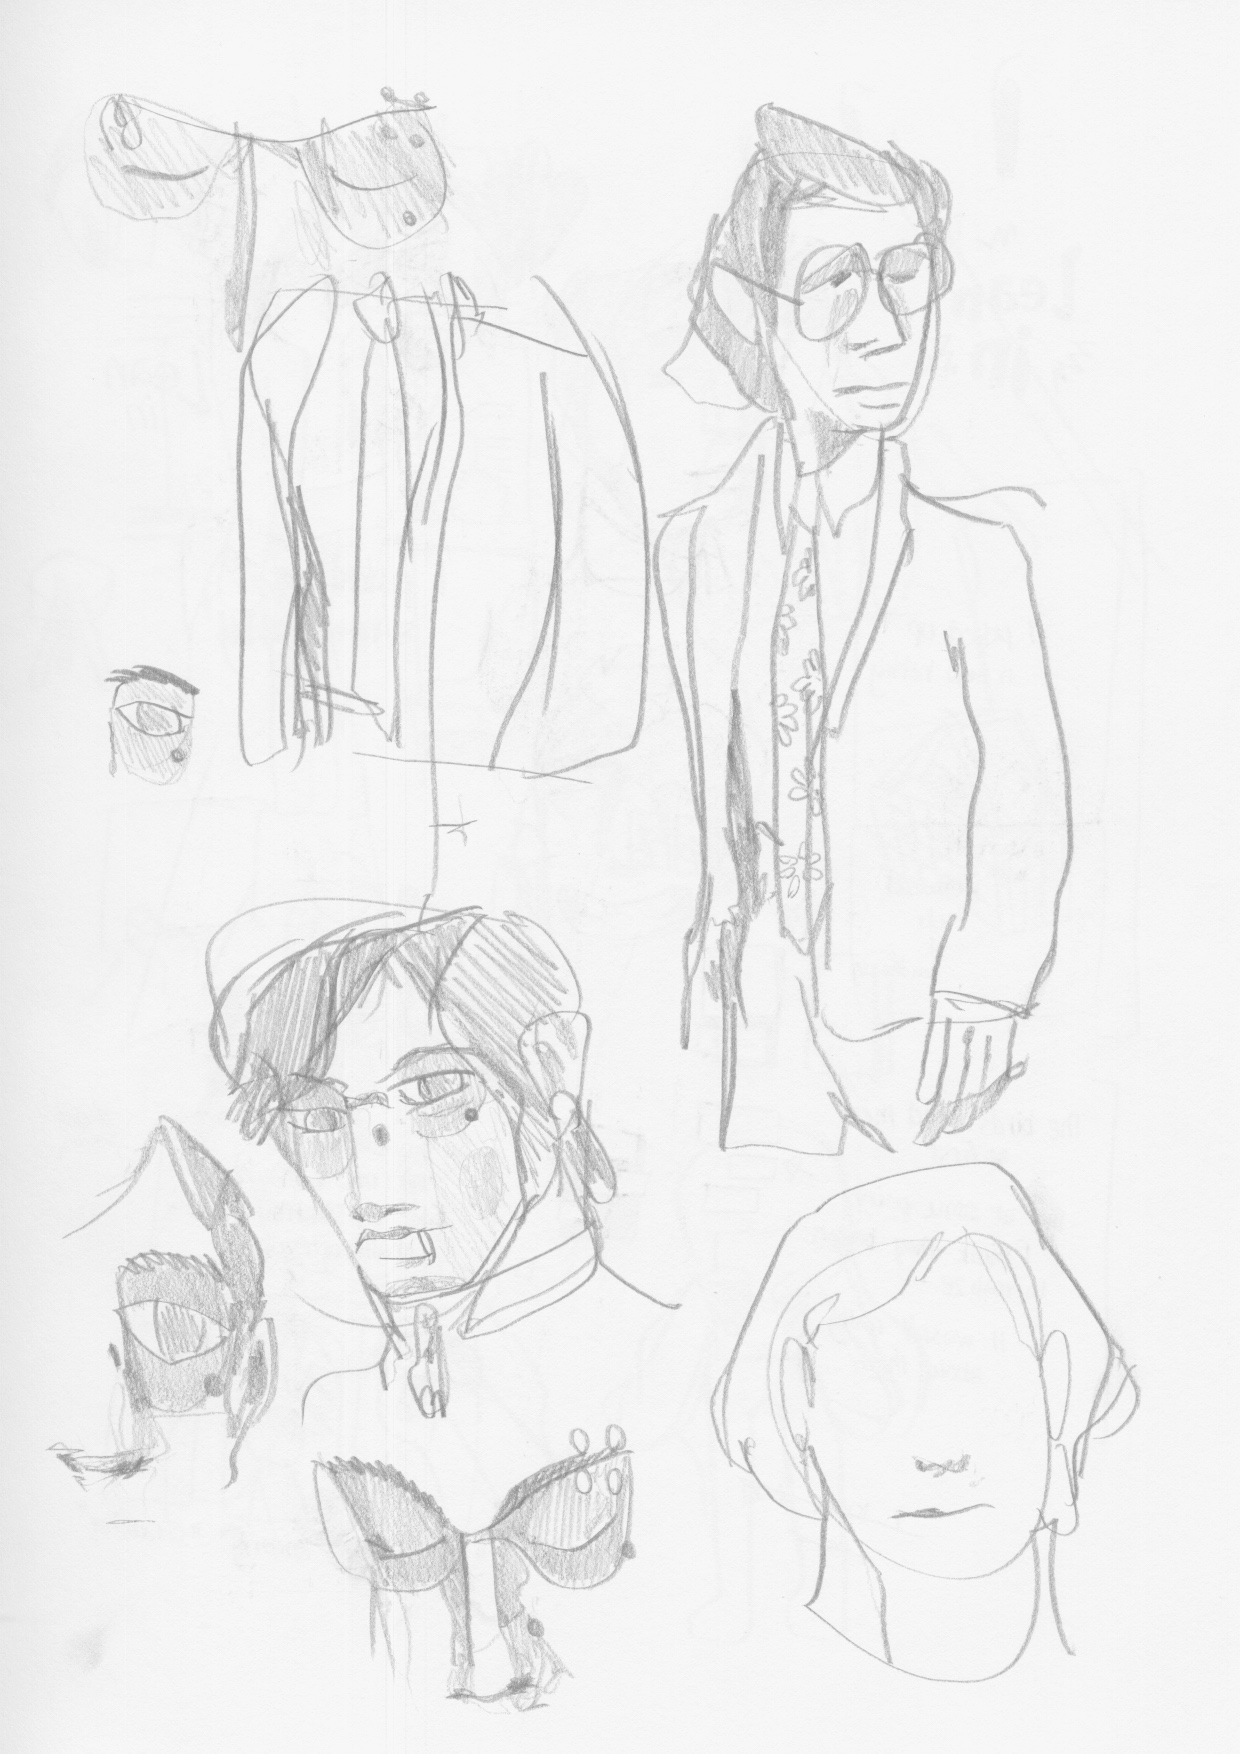 Sketchbook page 135